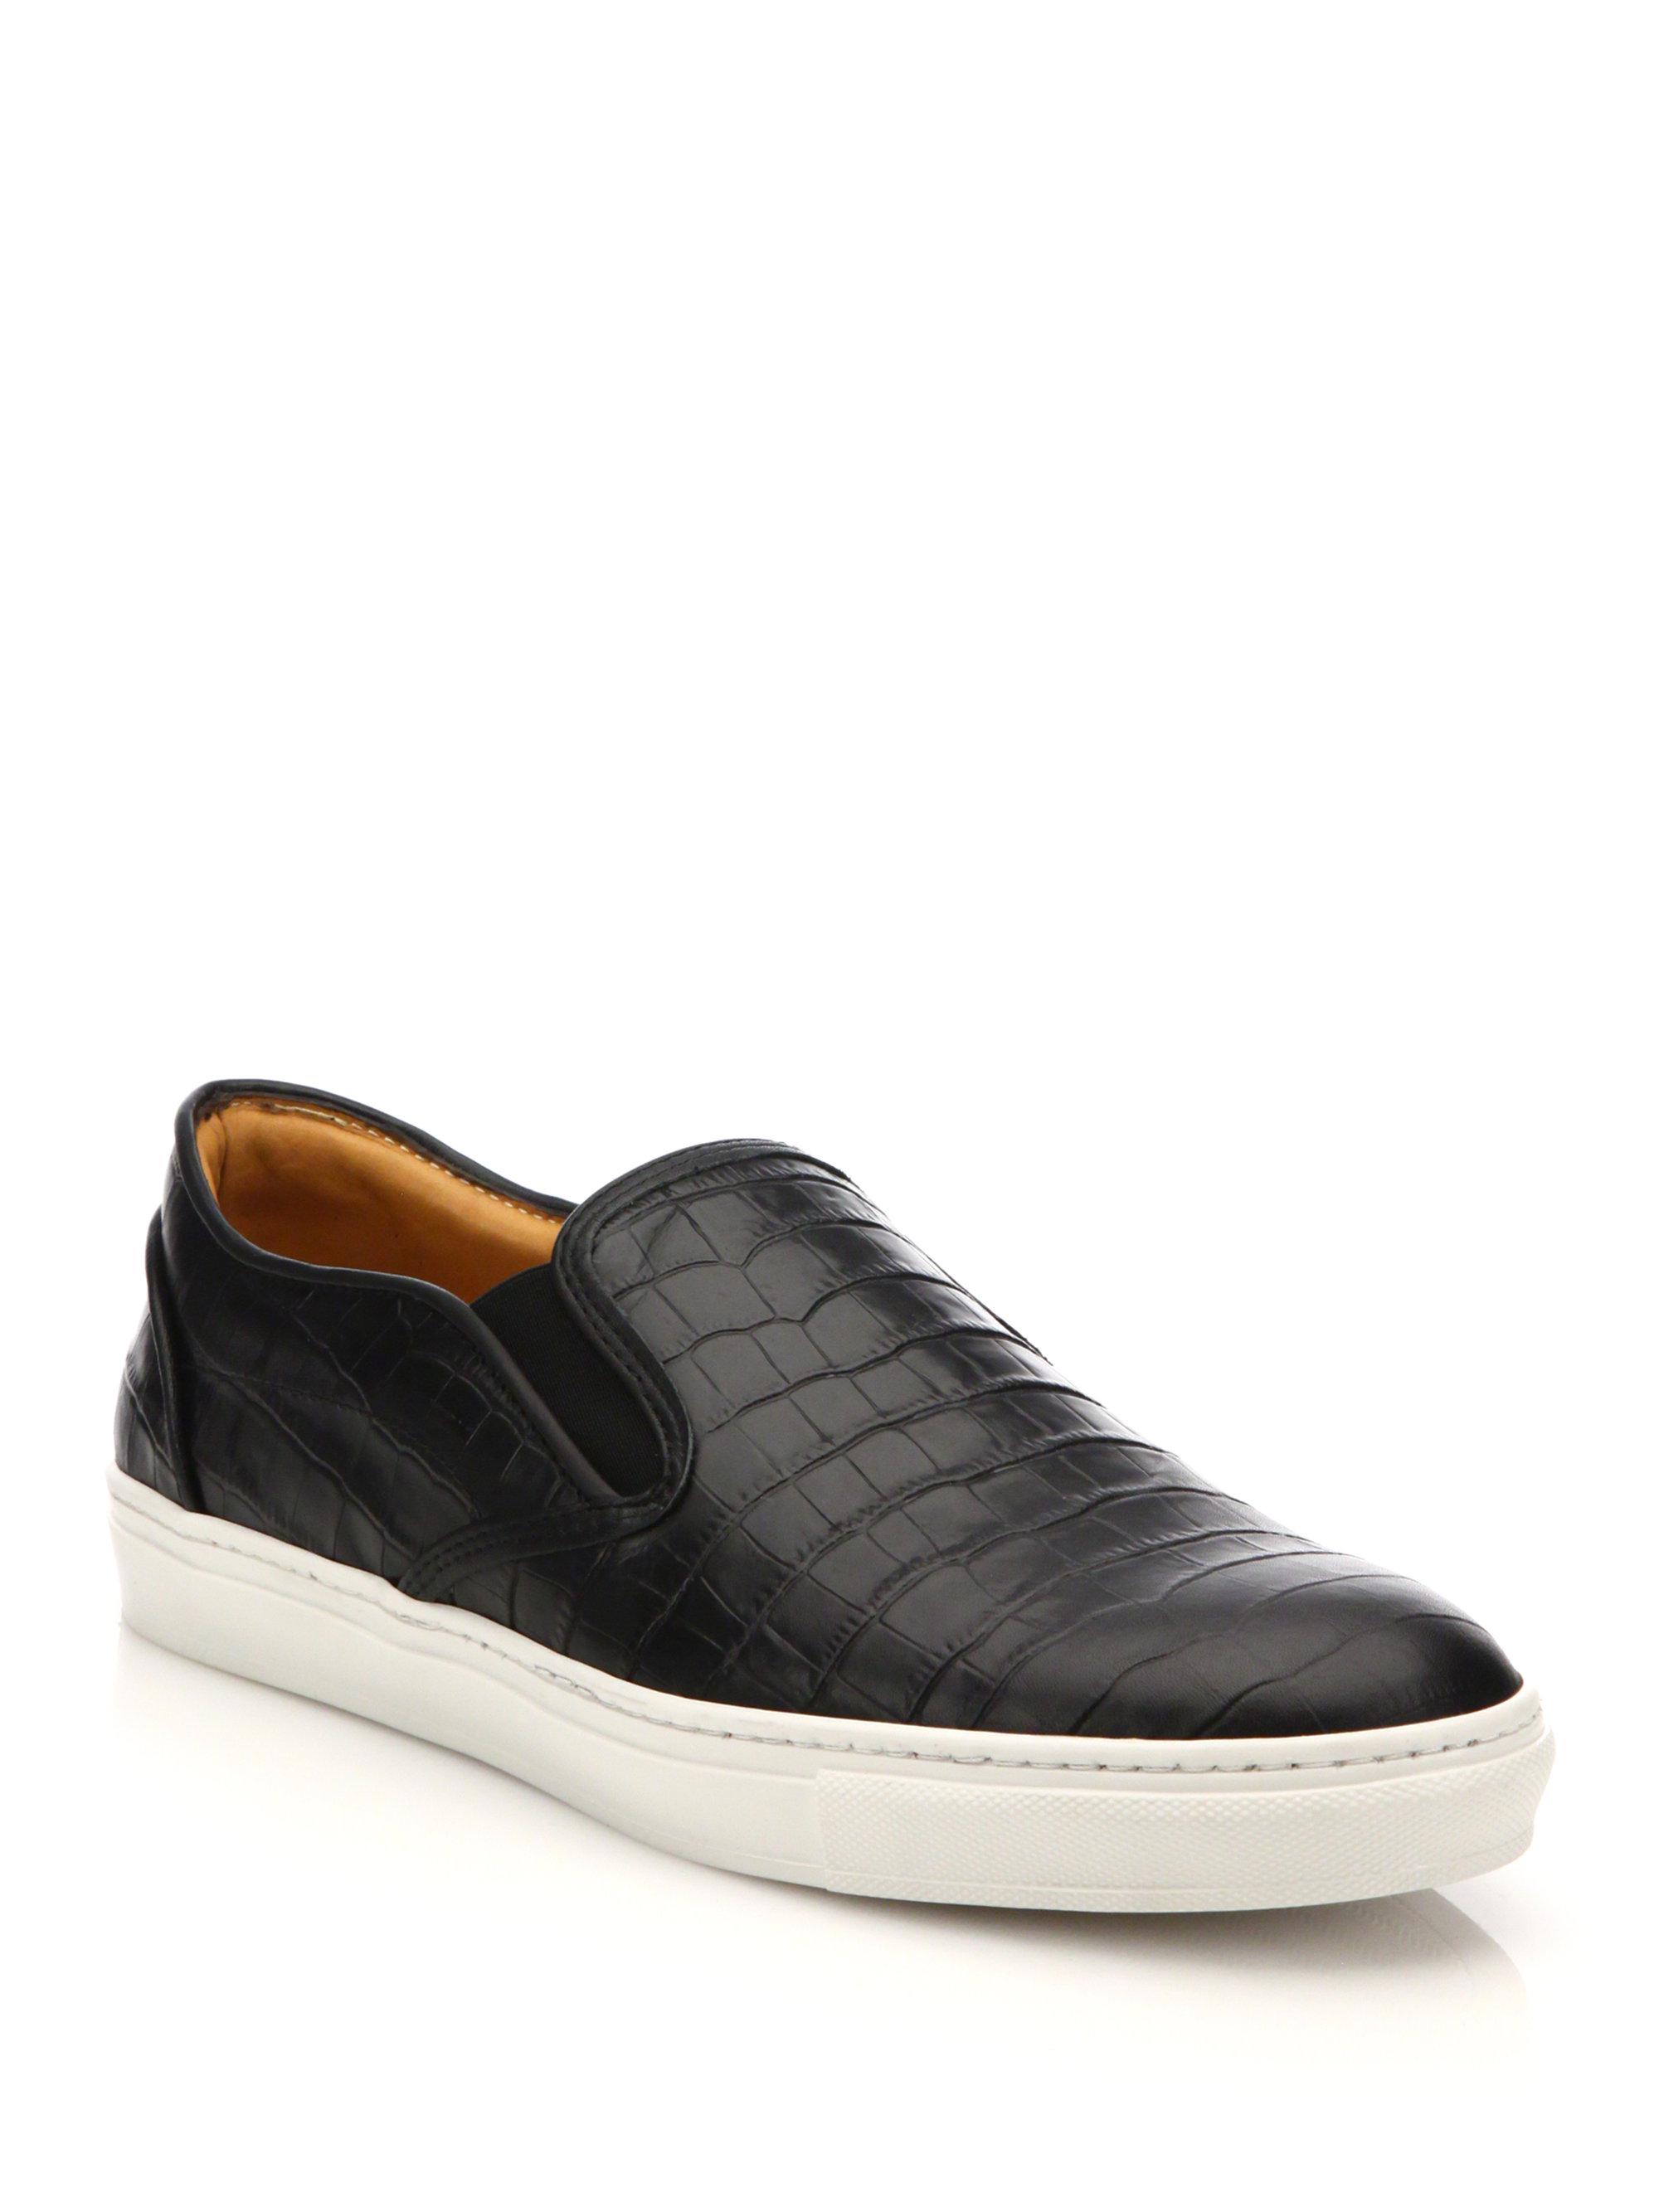 Saks Fifth Avenue Croc Print Slip-on Sneakers in Black for Men - Lyst